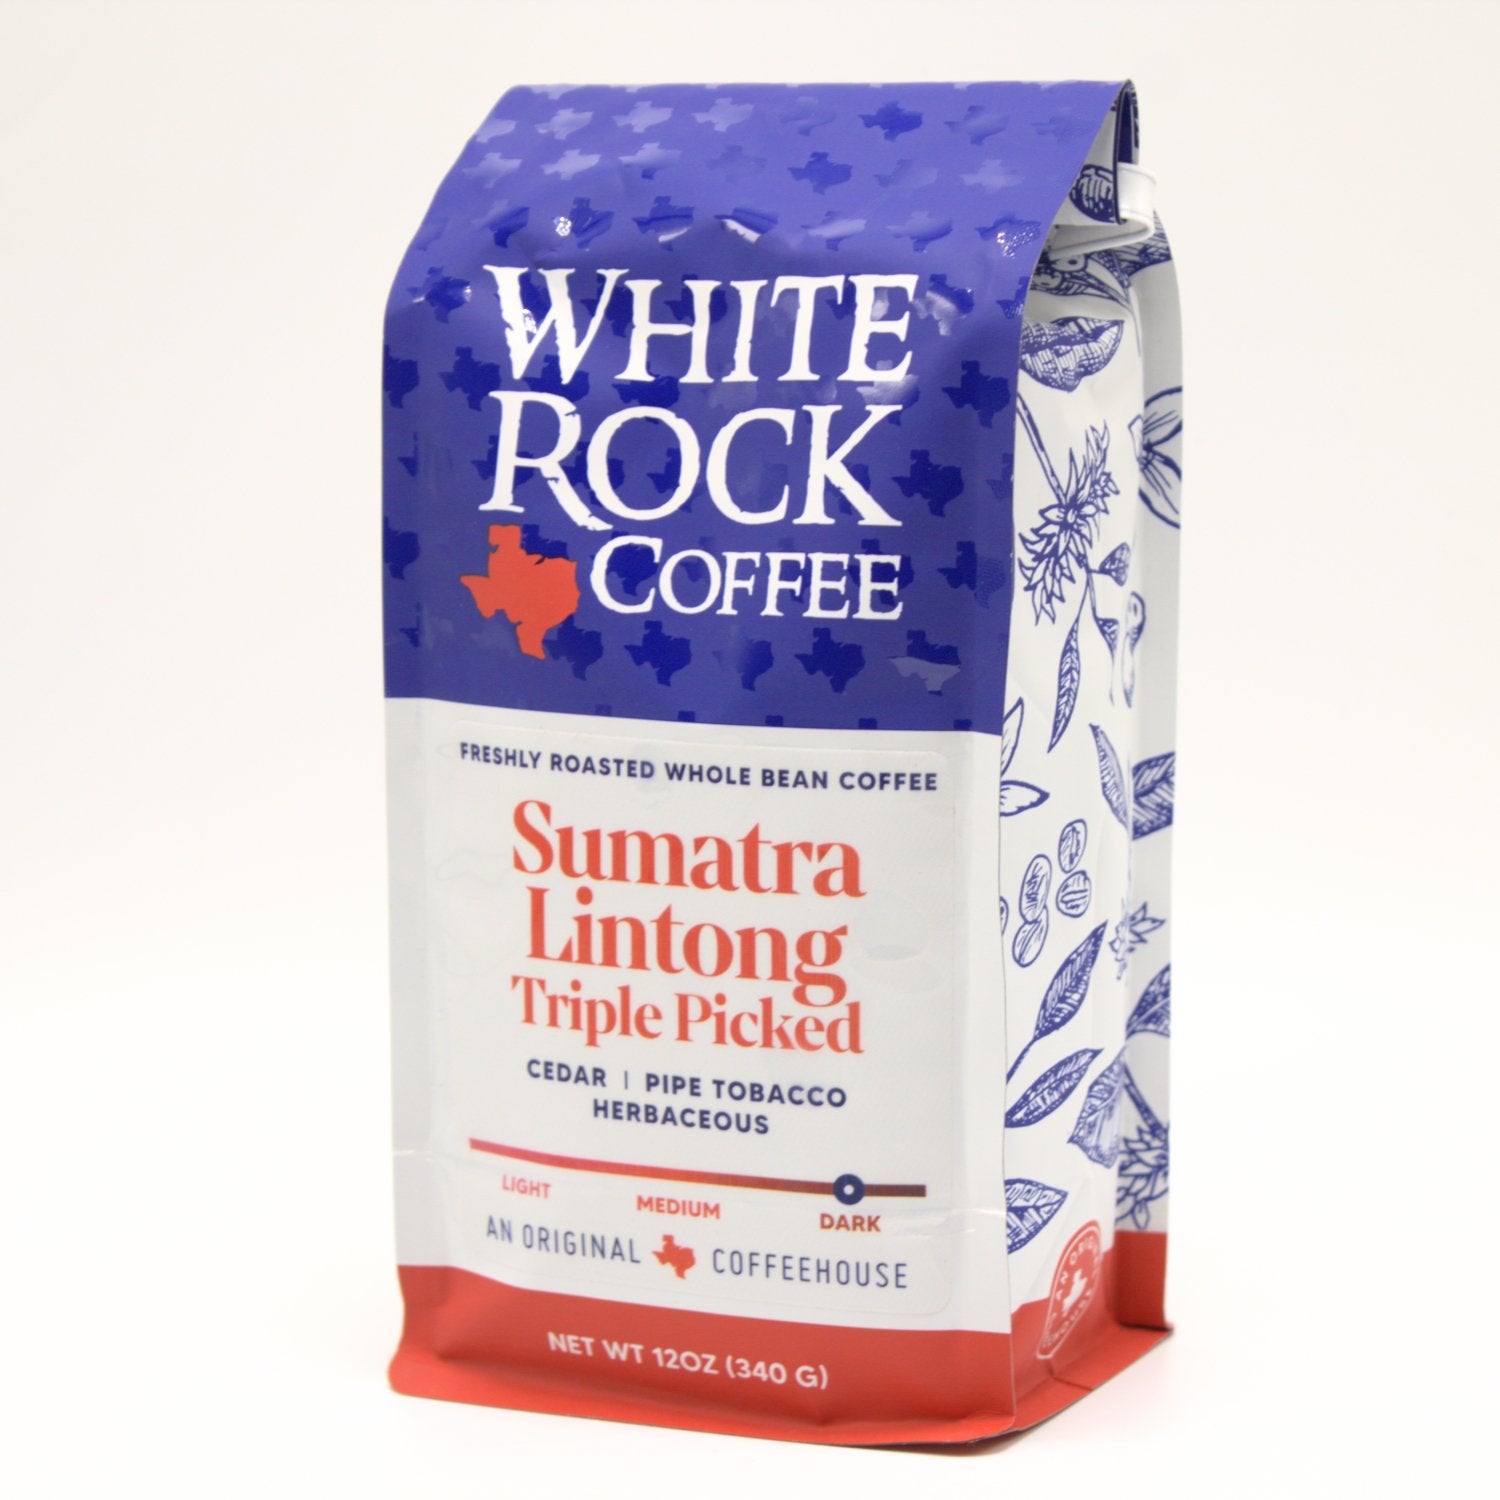 Sumatra Lintong Triple Picked - White Rock Coffee